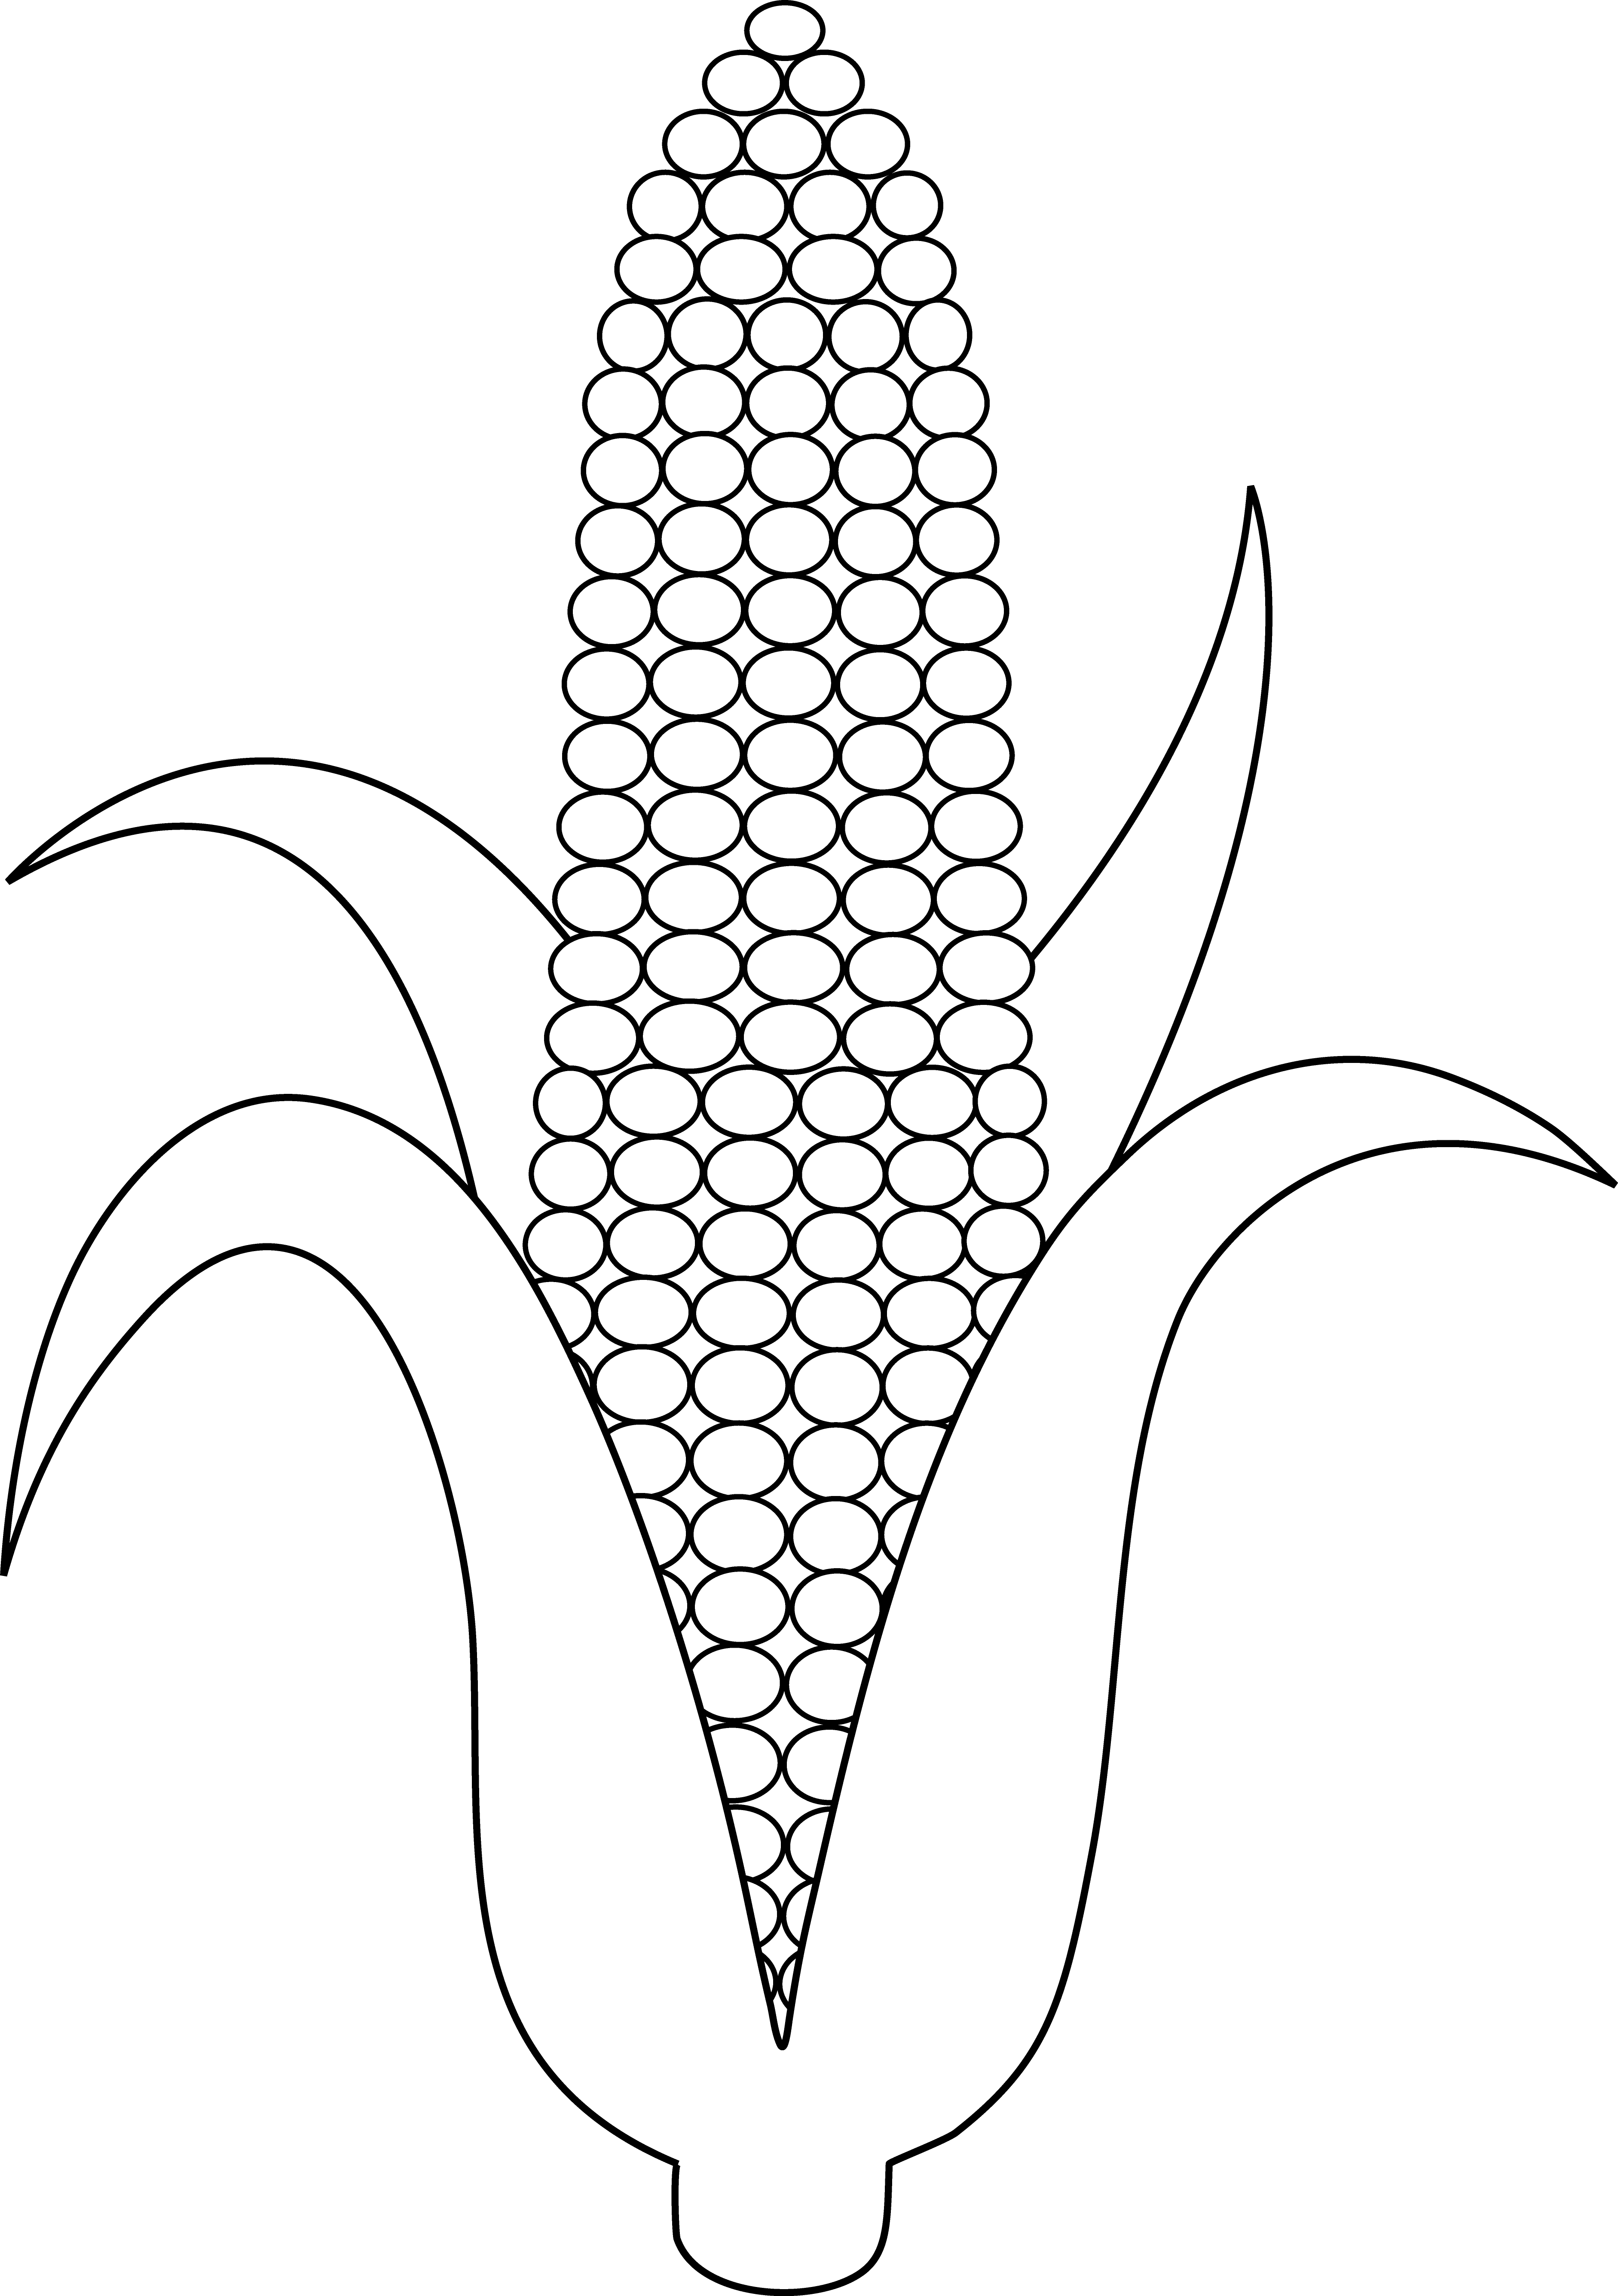 corn-on-the-cob-candy-corn-maize-clip-art-corn-png-download-3765-5344-free-transparent